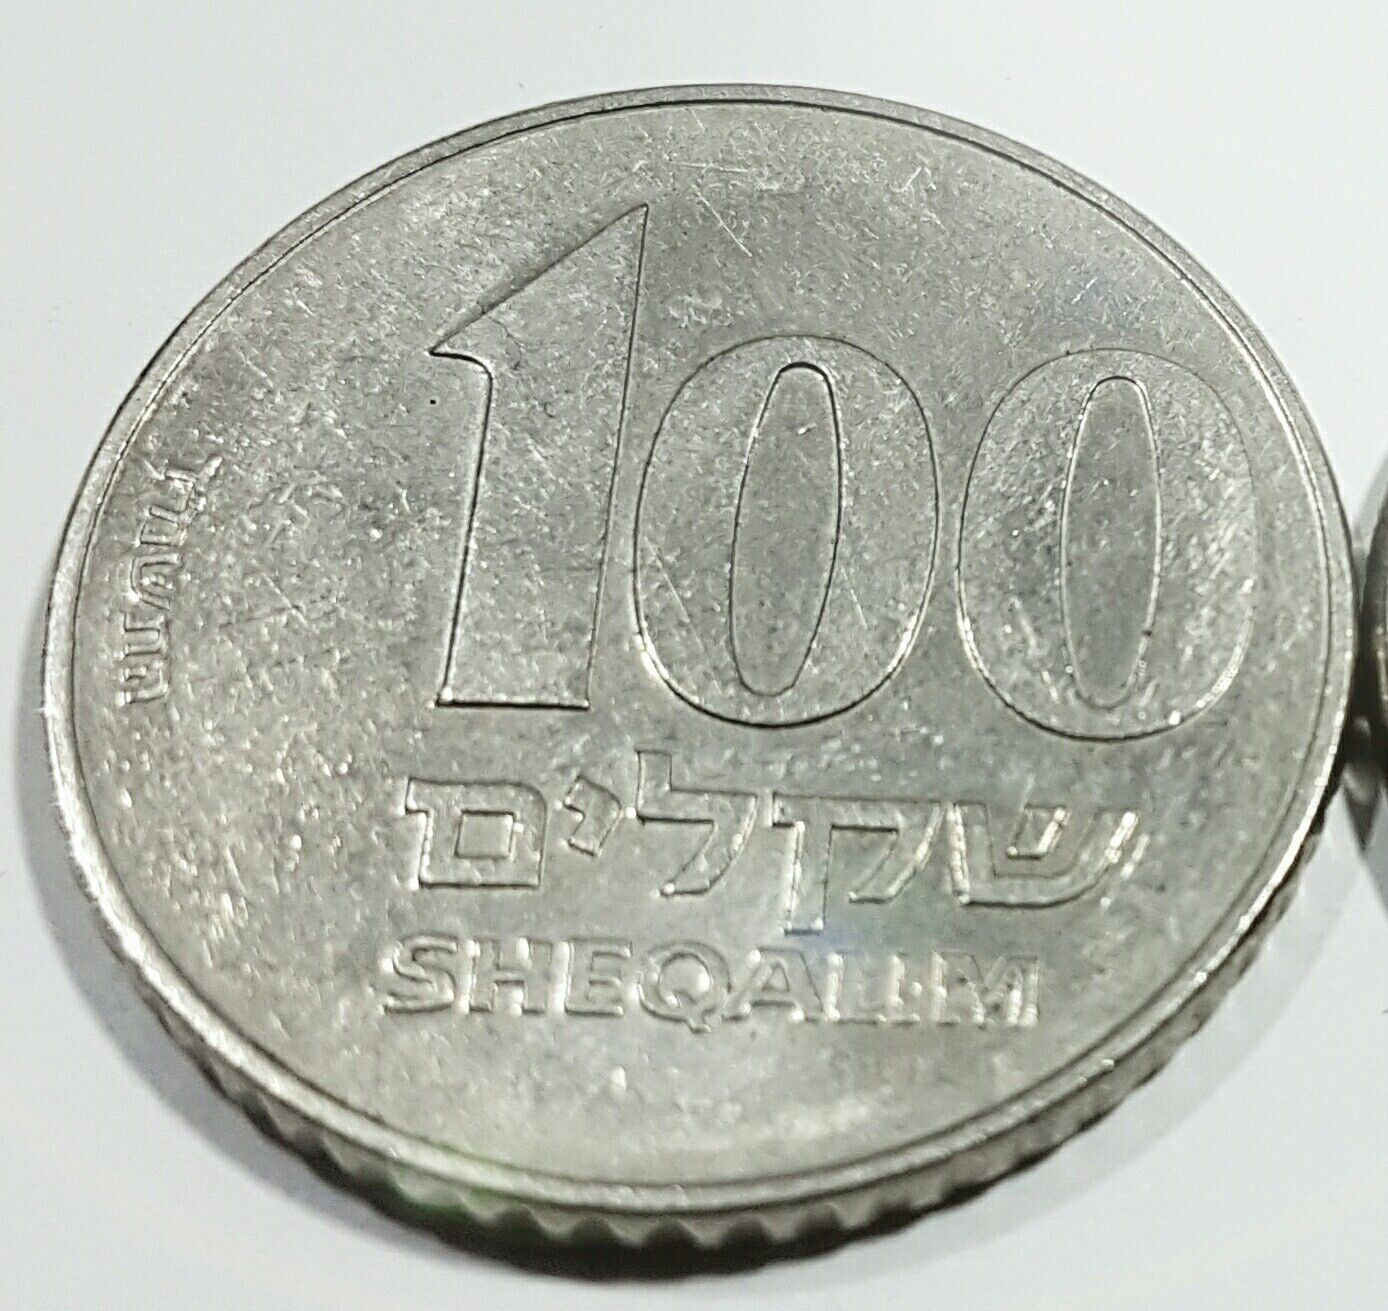 Israel Complete Set Coins Lot of 30 Coin Pruta Sheqalim Sheqel Agorot Since 1949 Без бренда - фотография #11